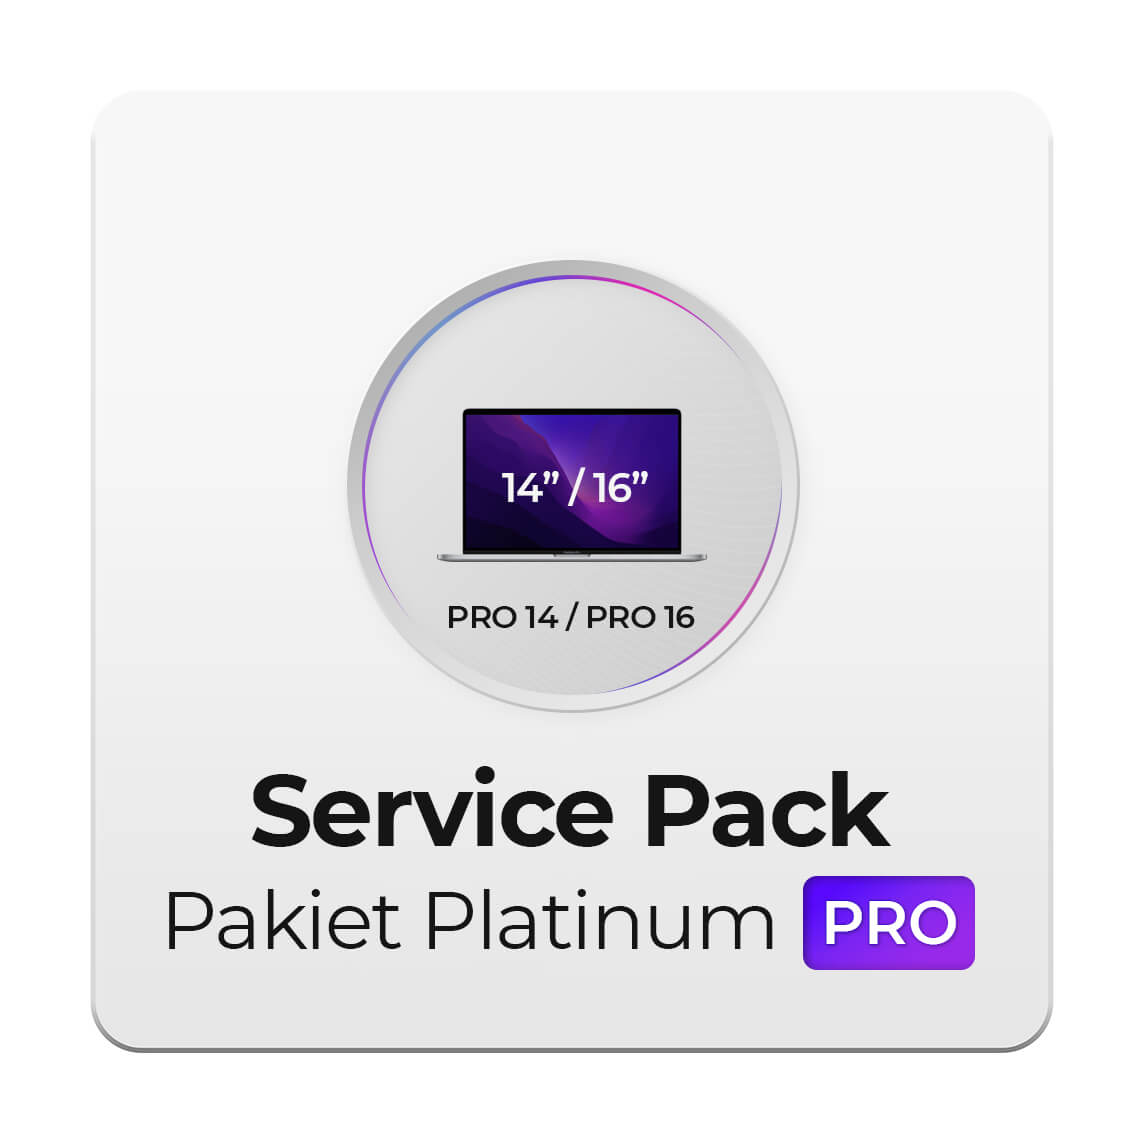 Service Pack - Pakiet Platinum PRO 4Y dla Apple MacBook Pro 14 i Pro 16